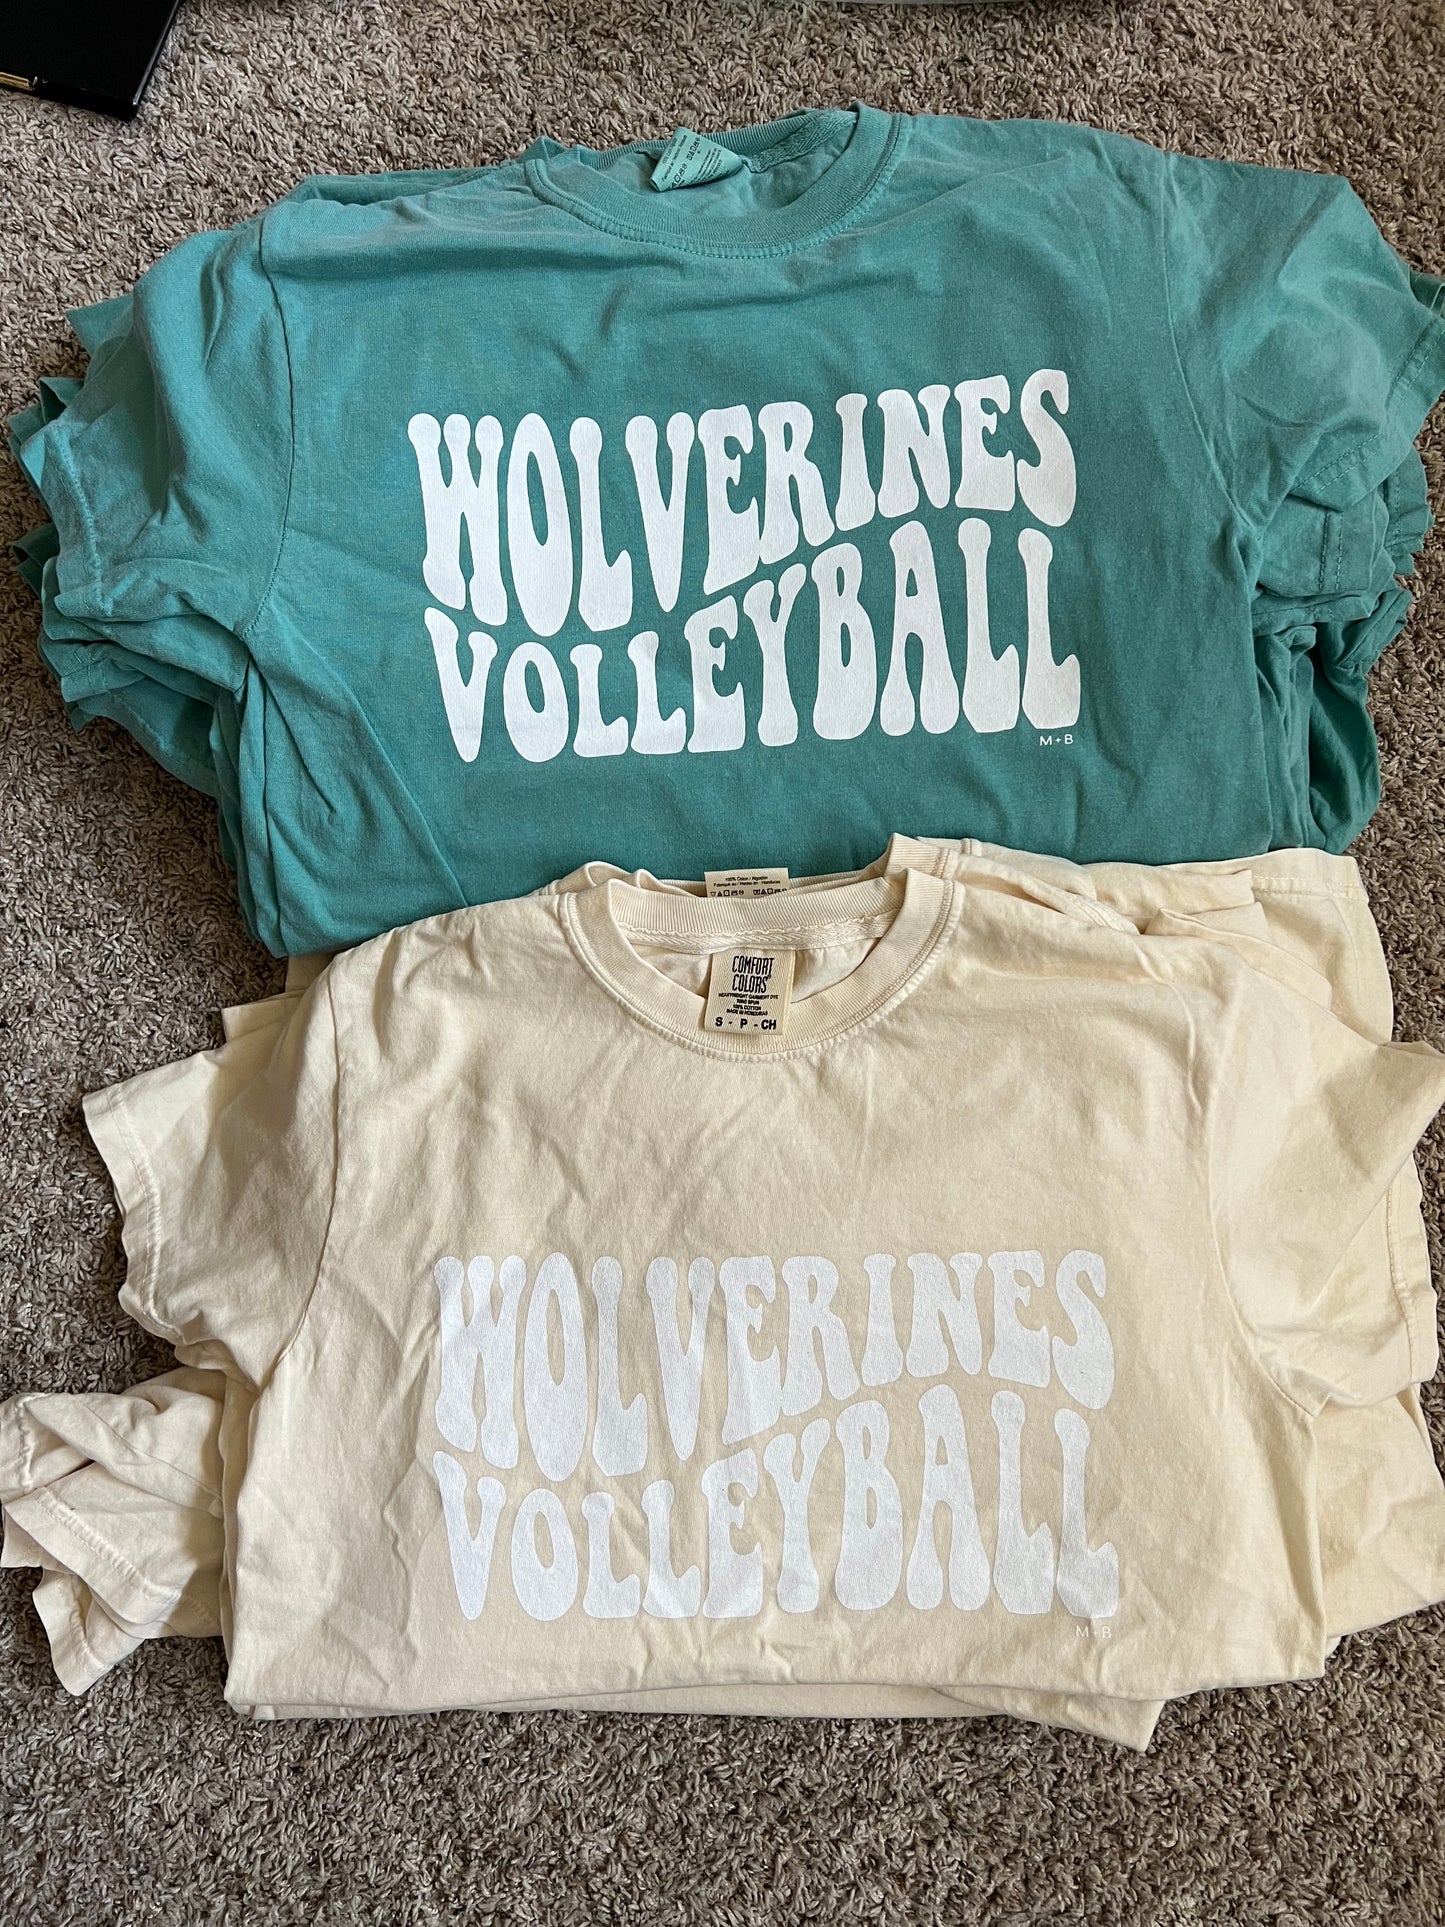 Wolverines Volleyball